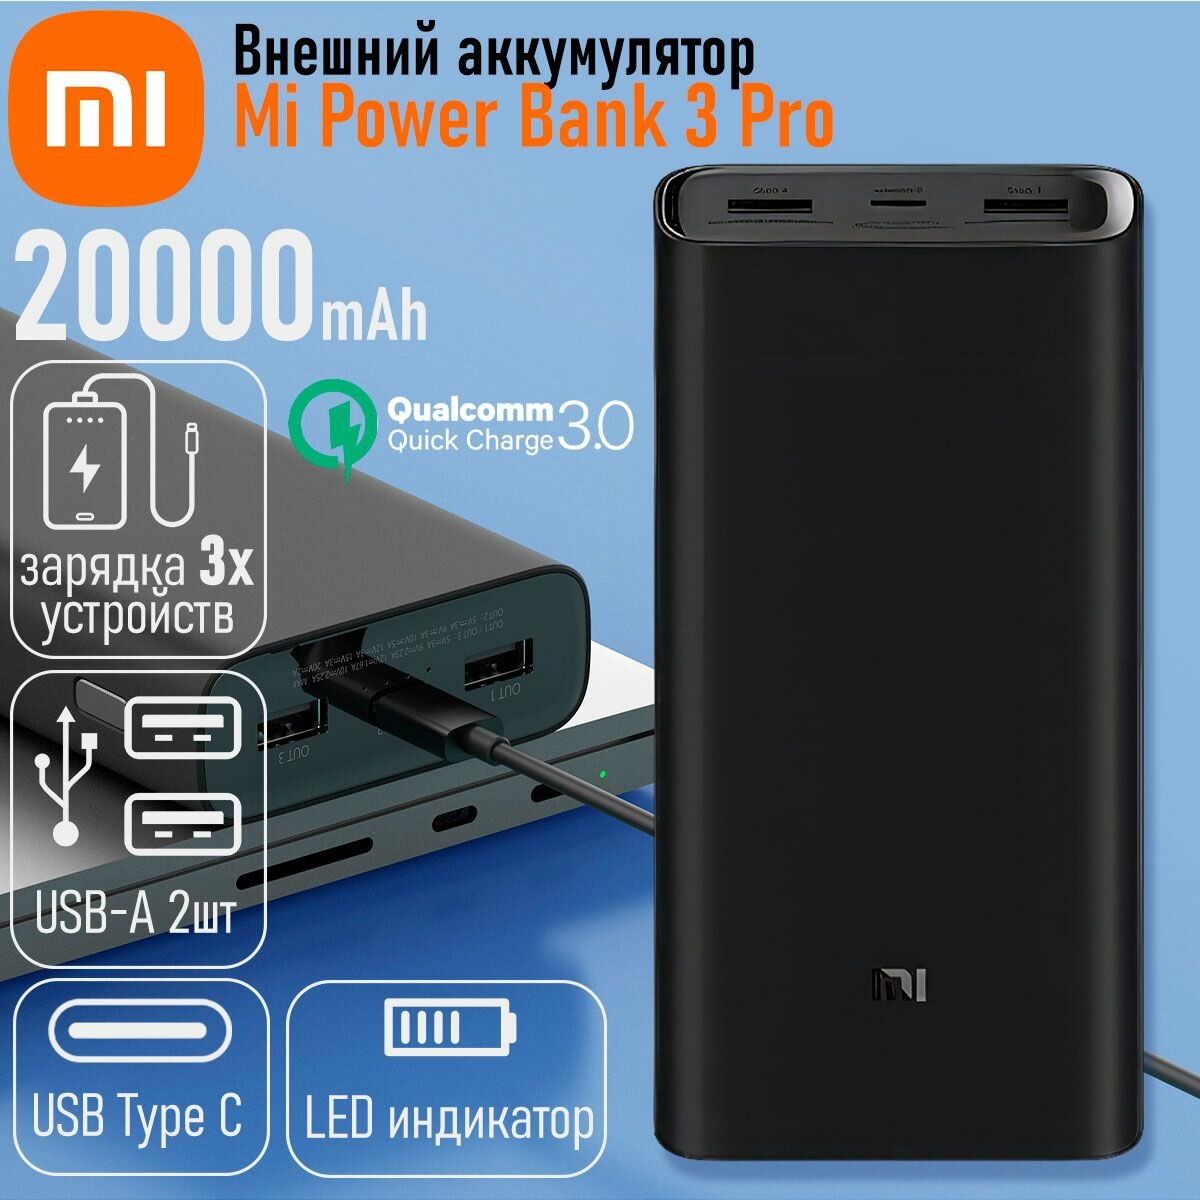 Внешний аккумулятор Mi Power Bank 3 Pro черный 20000 mAh 50W